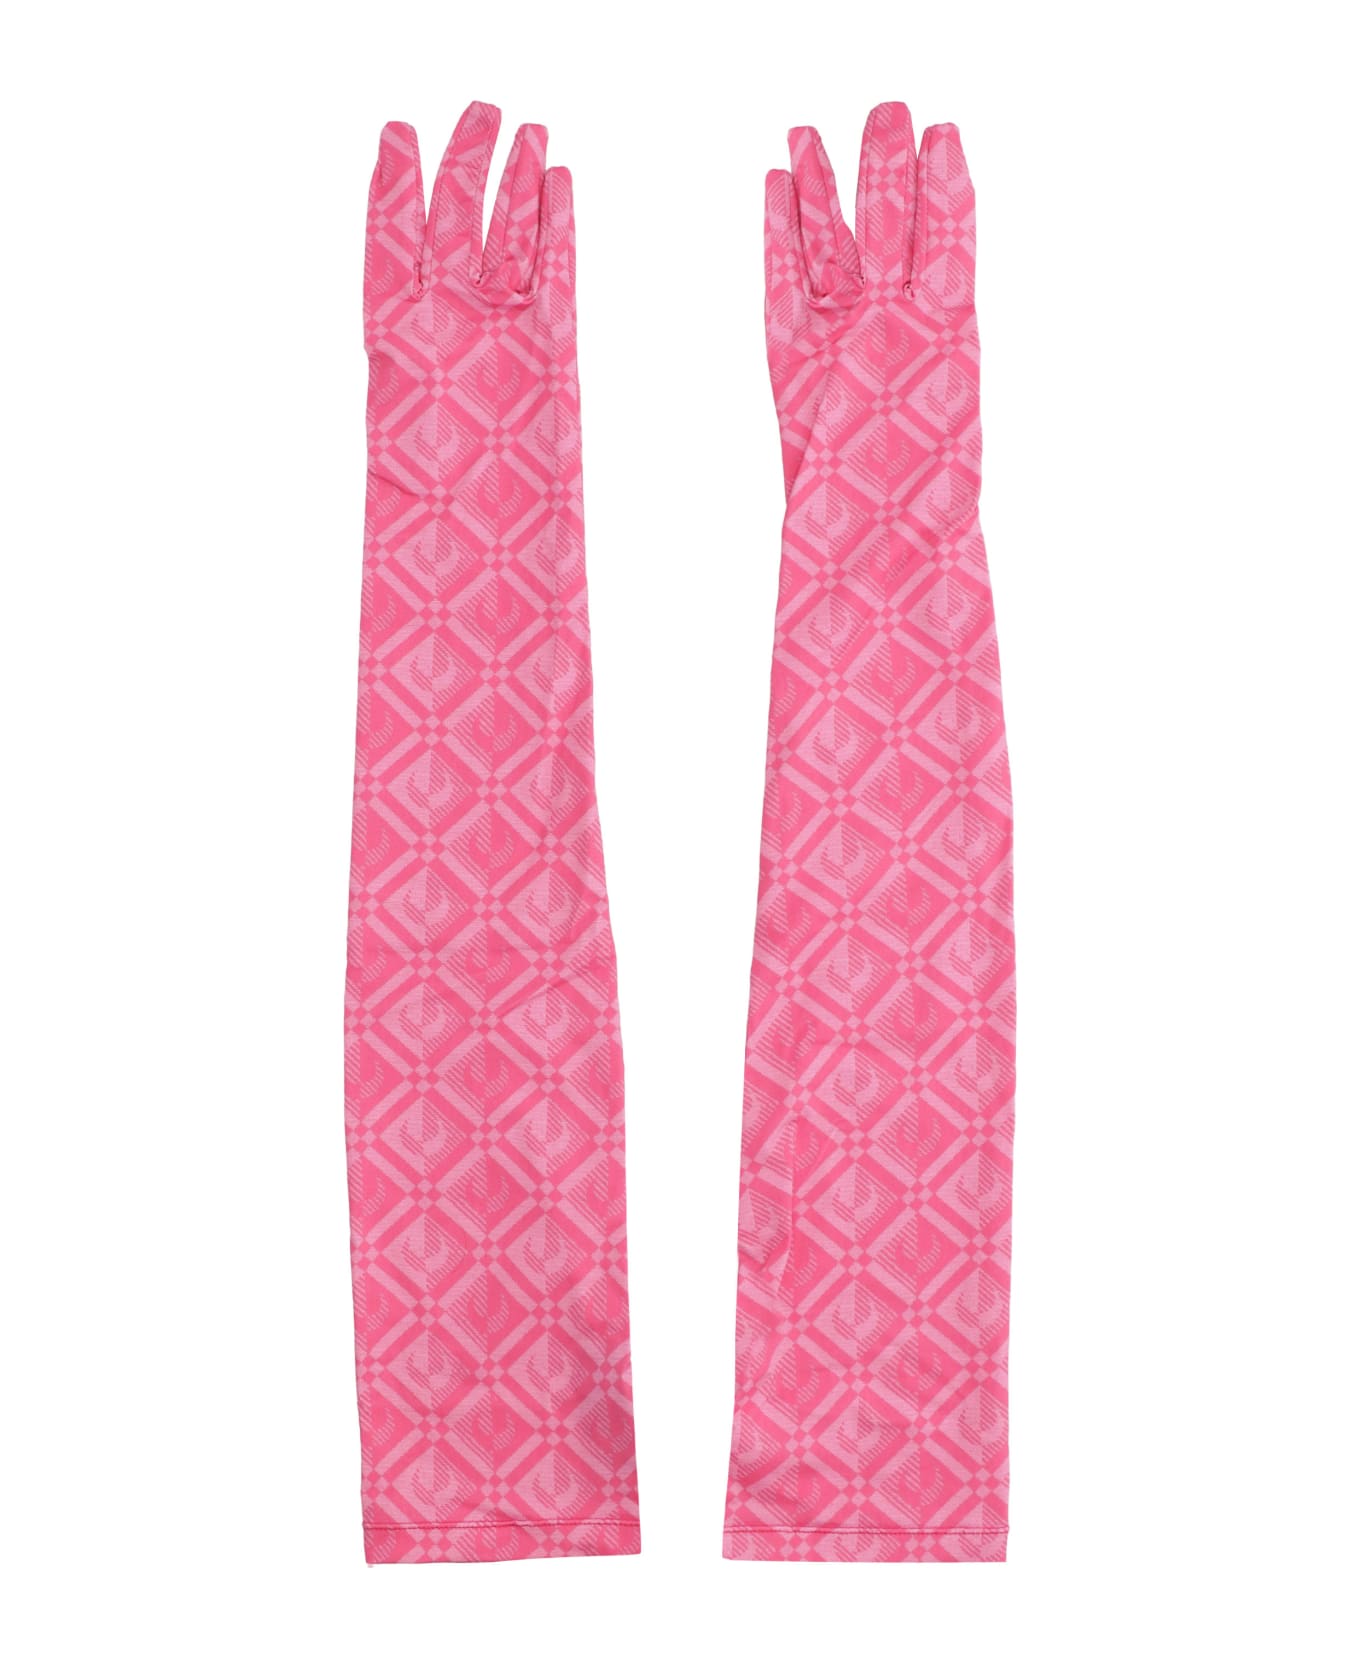 Marine Serre Printed Long Gloves - Pink